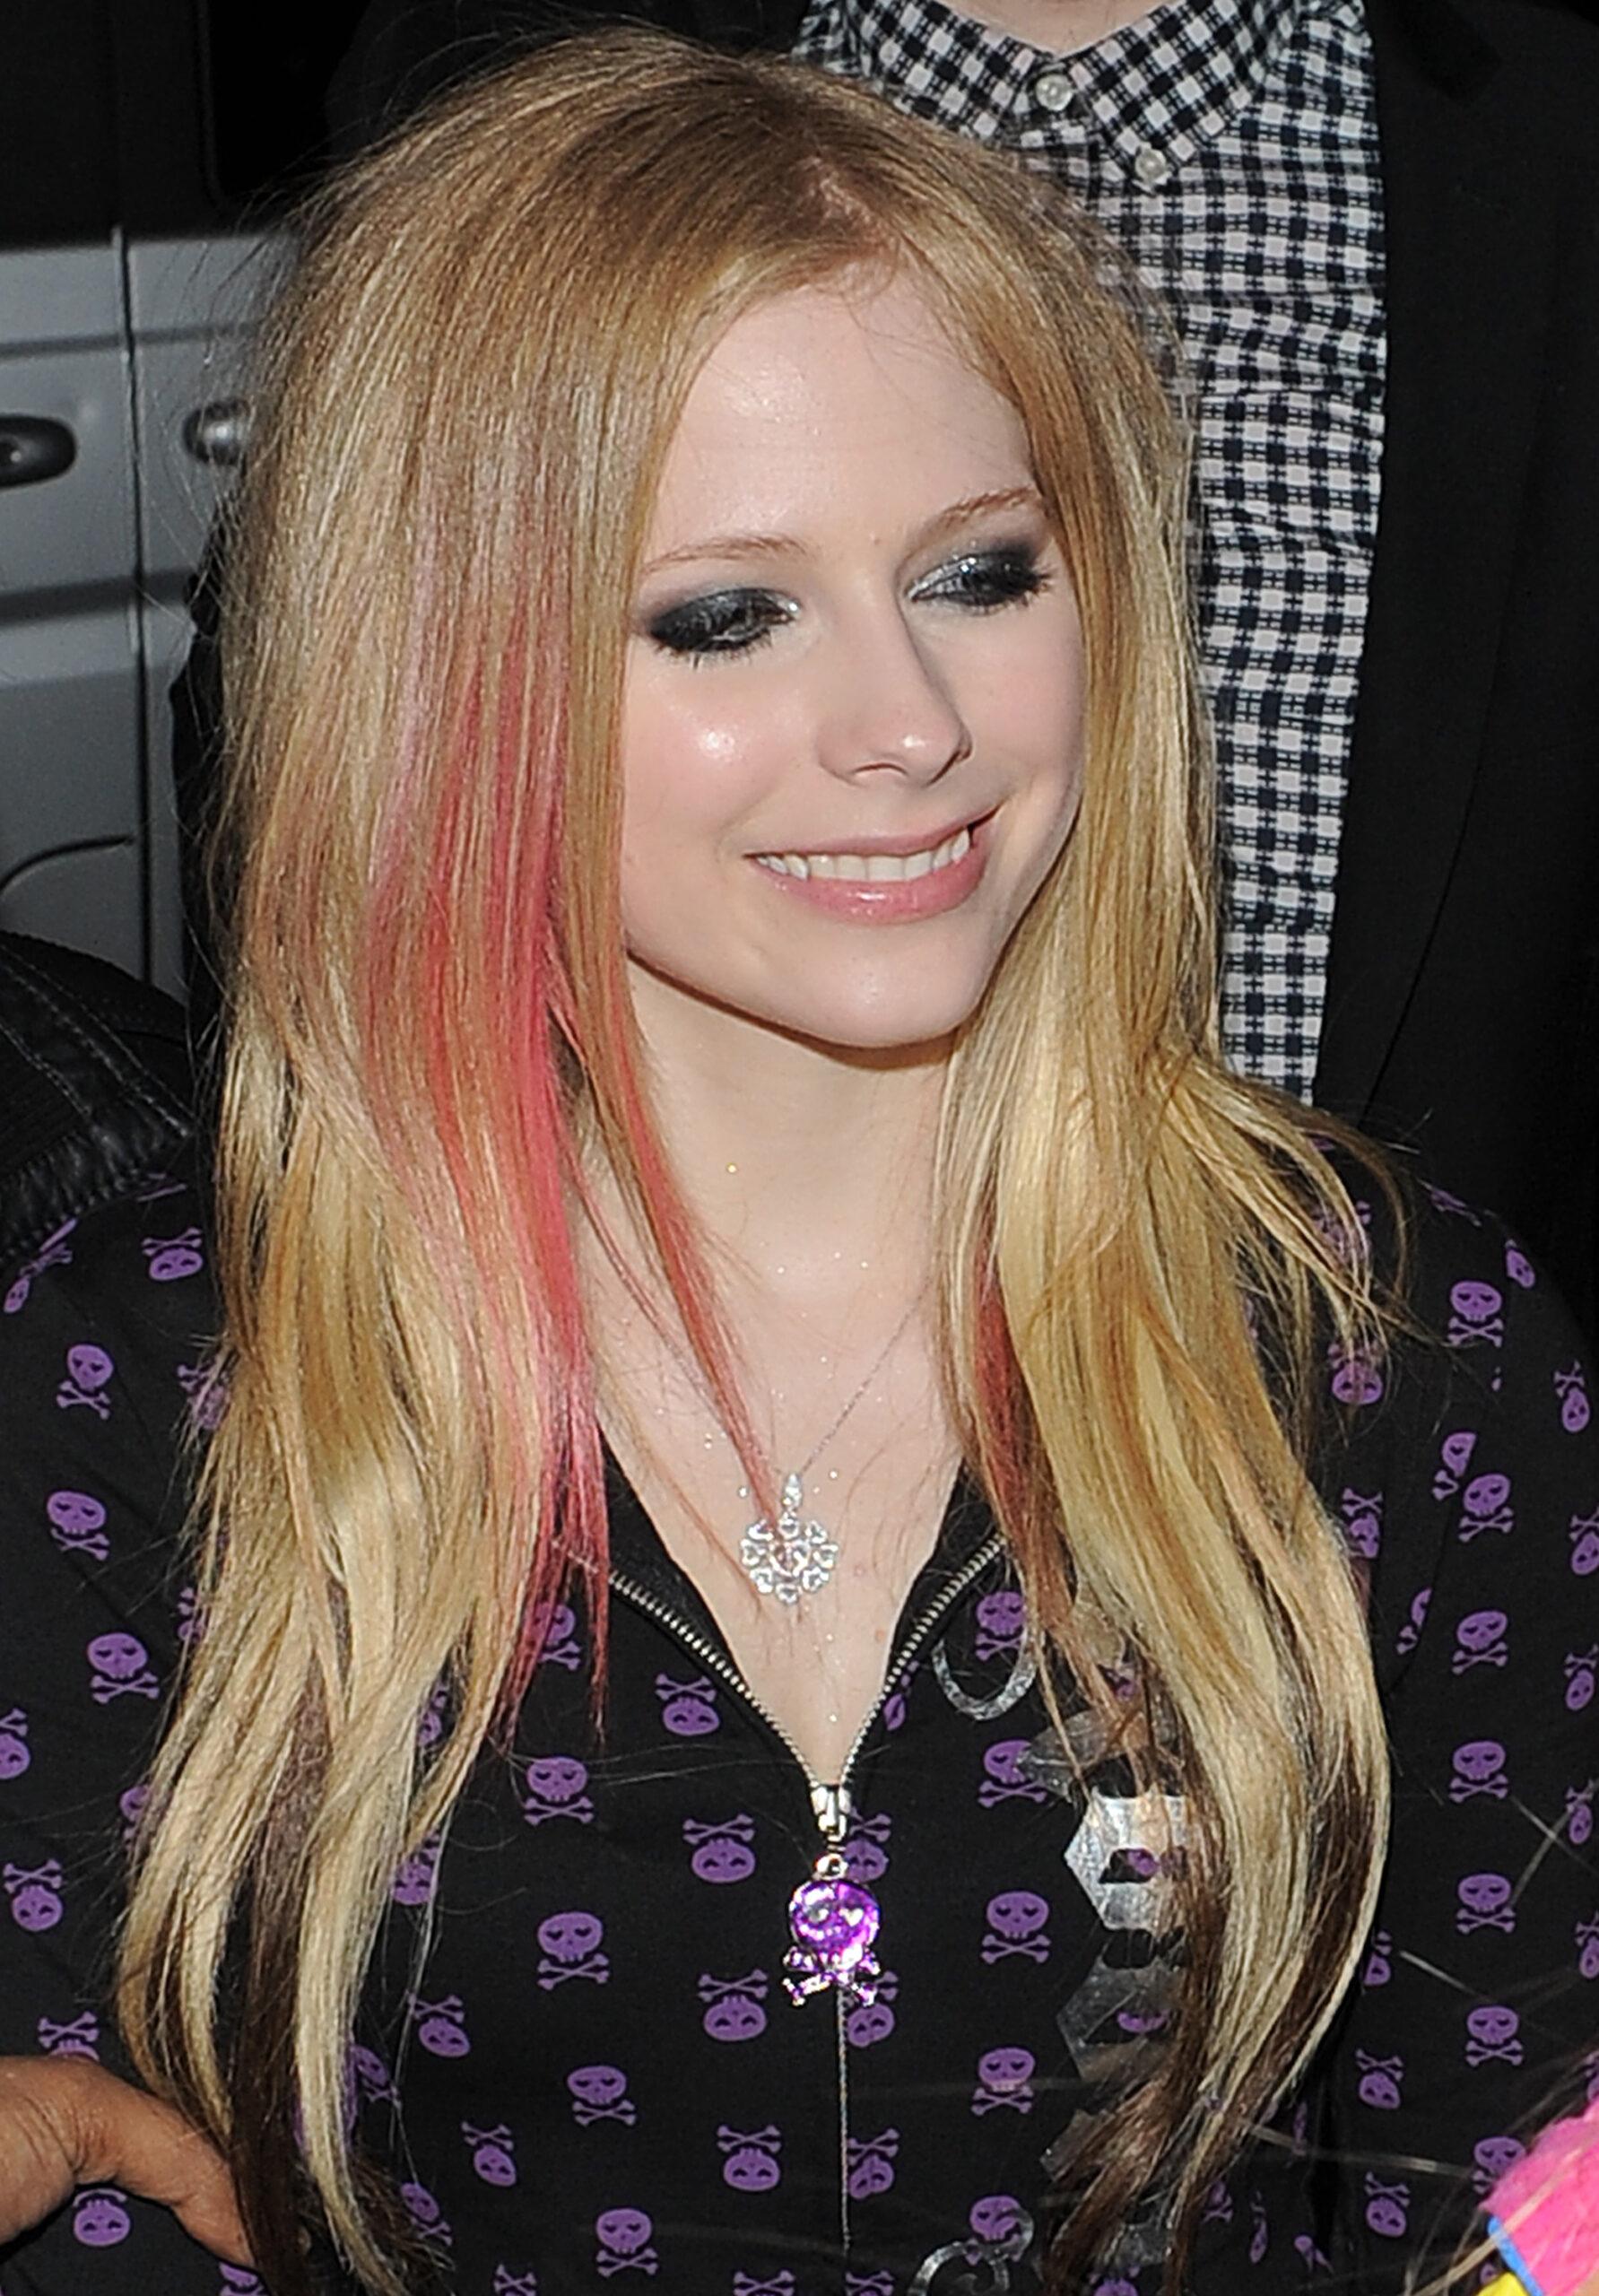 Avril Lavigne Recreates Her Most Iconic Album Cover